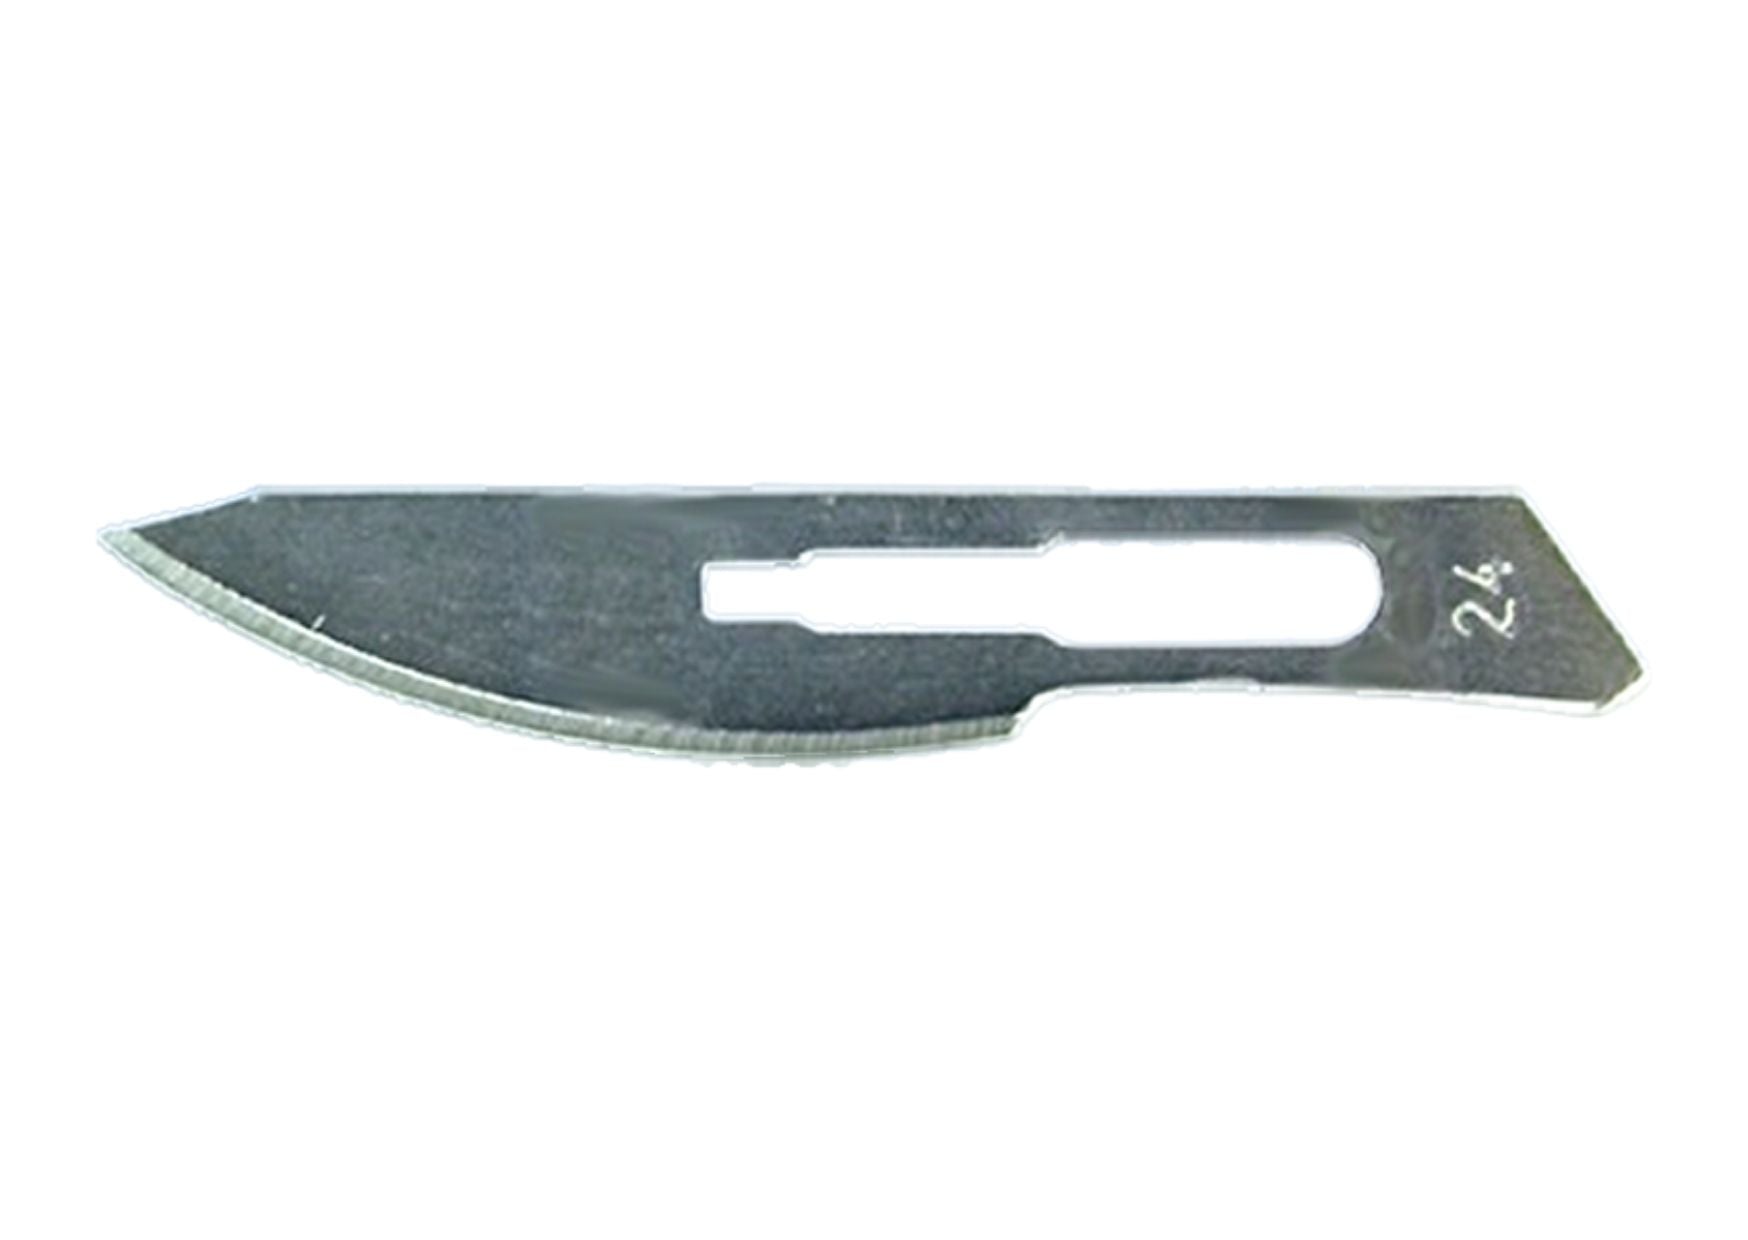 Lavabi's scalpel blades